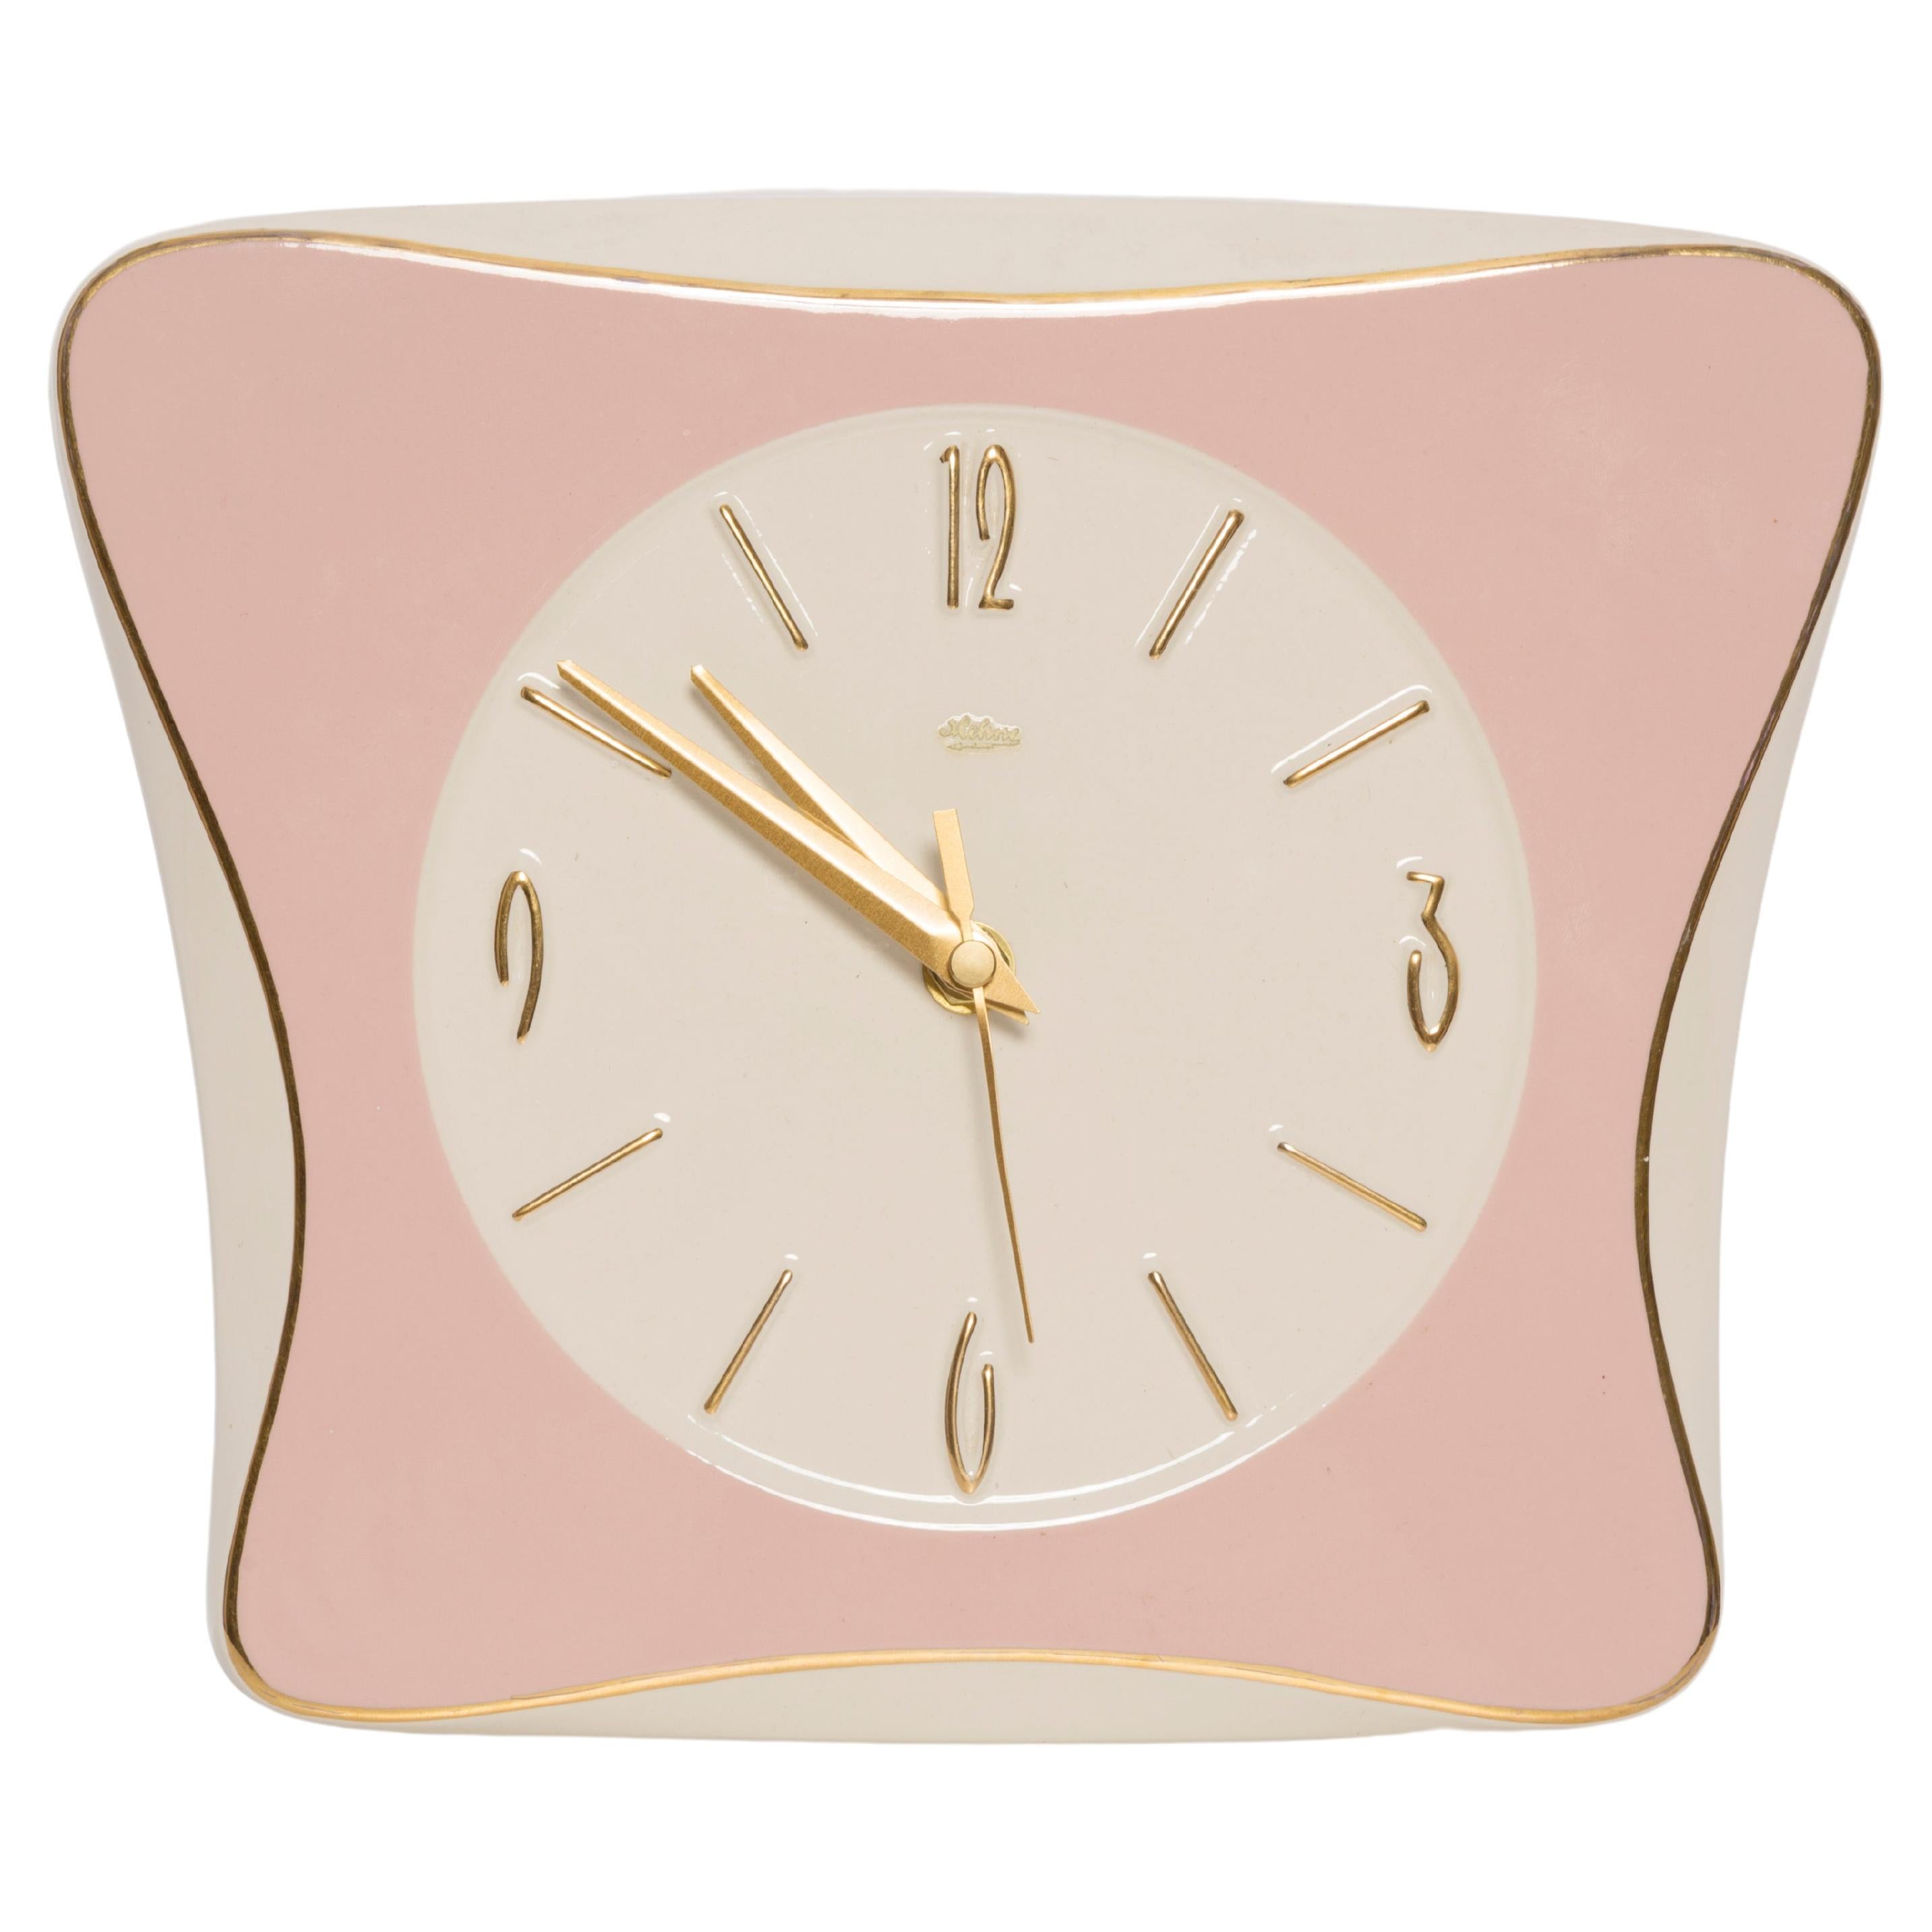 Mid Century Ceramic Pink Wall Clock, Mehne, Germany, 1960s